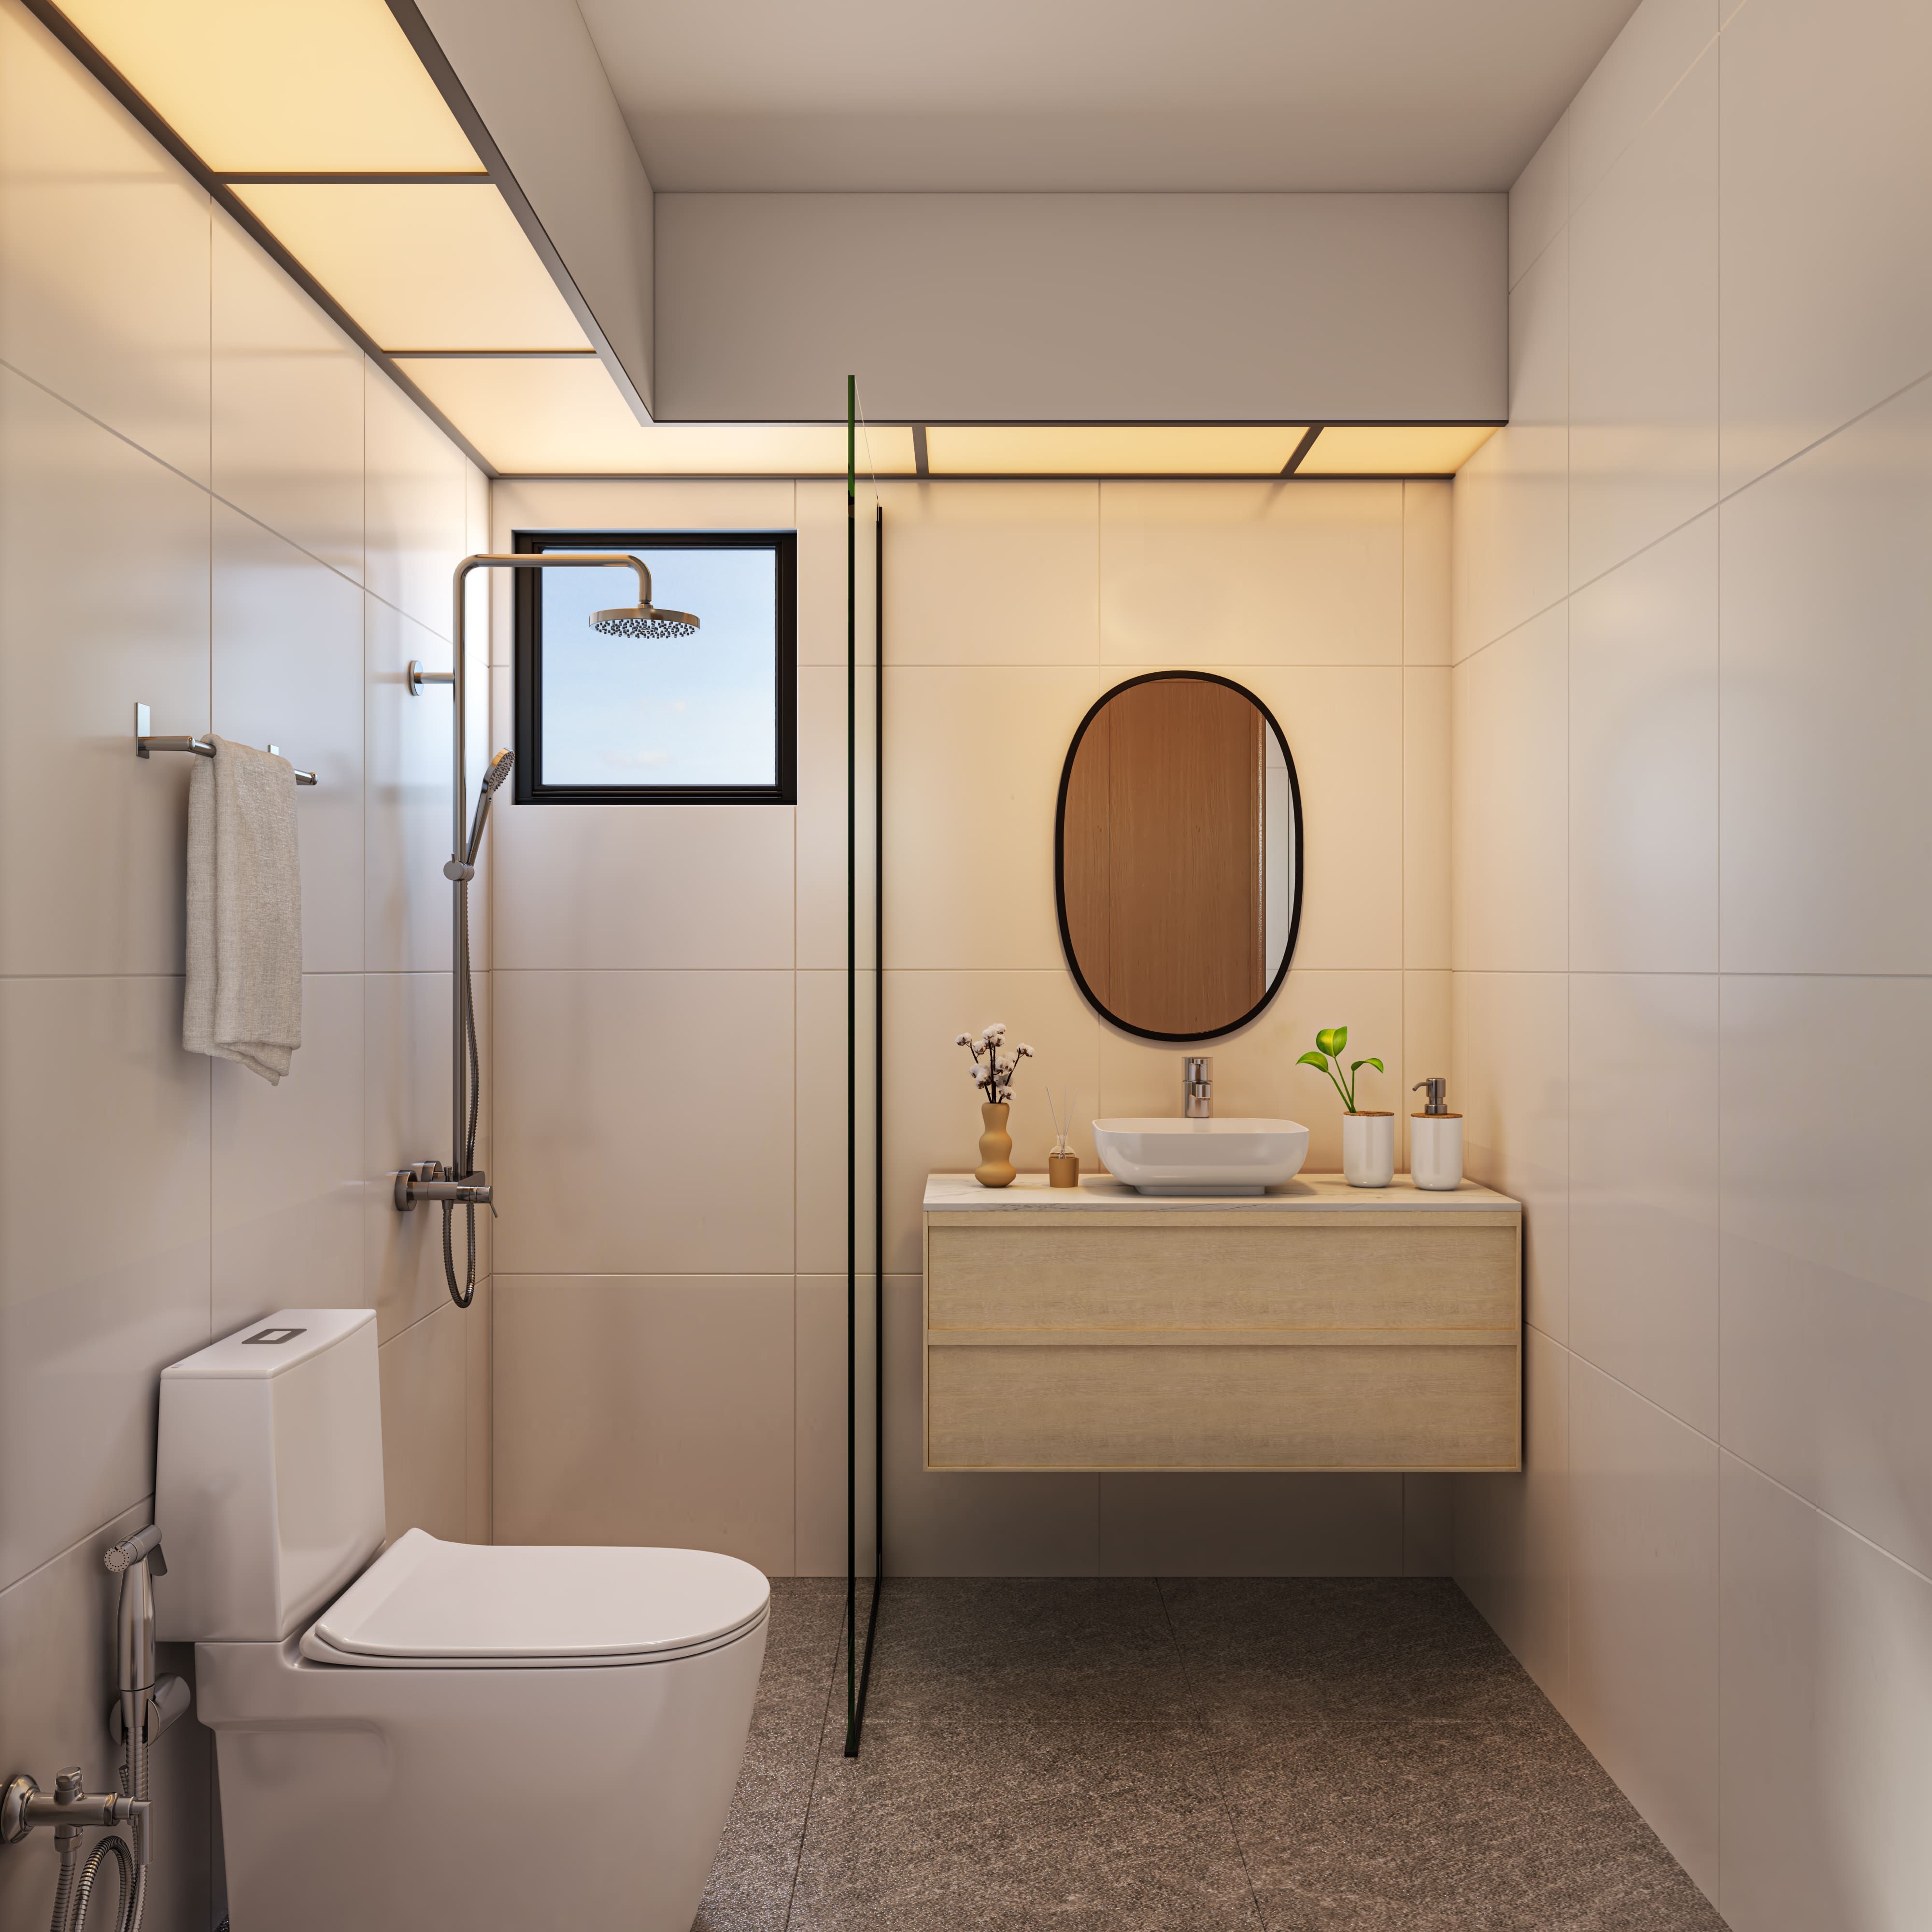 Contemporary Small Bathroom Design Idea With Storage Unit